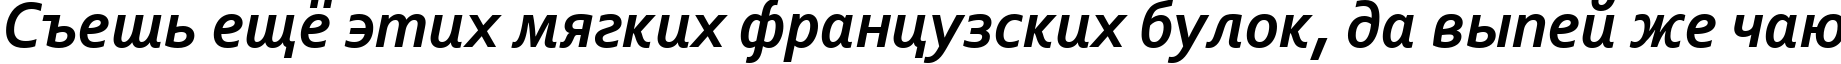 Пример написания шрифтом Corbel Bold Italic текста на русском